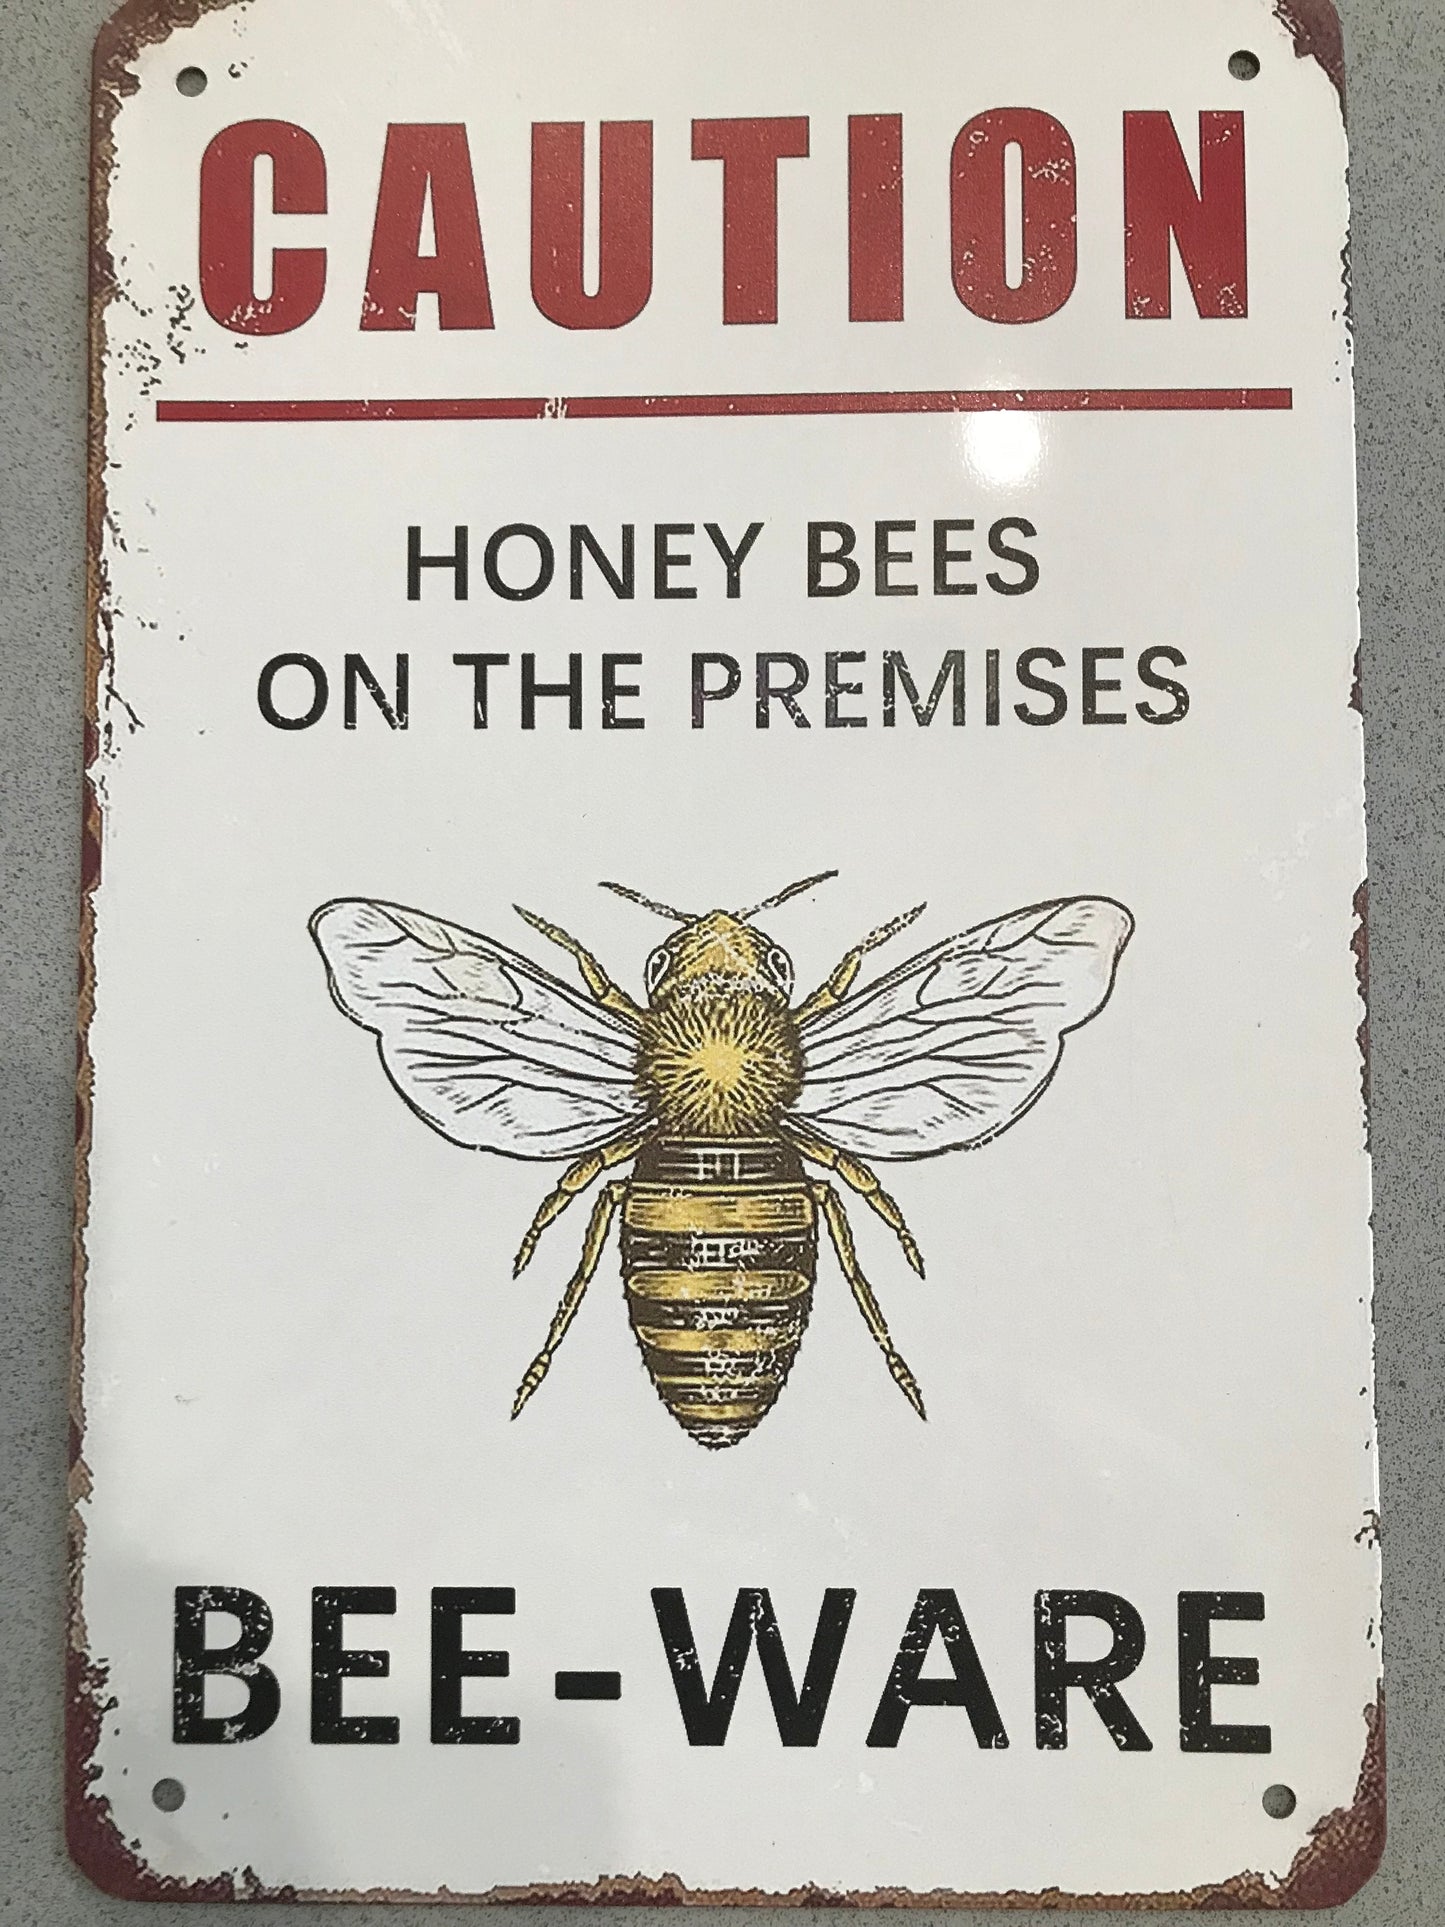 Beeware Caution Honeybees